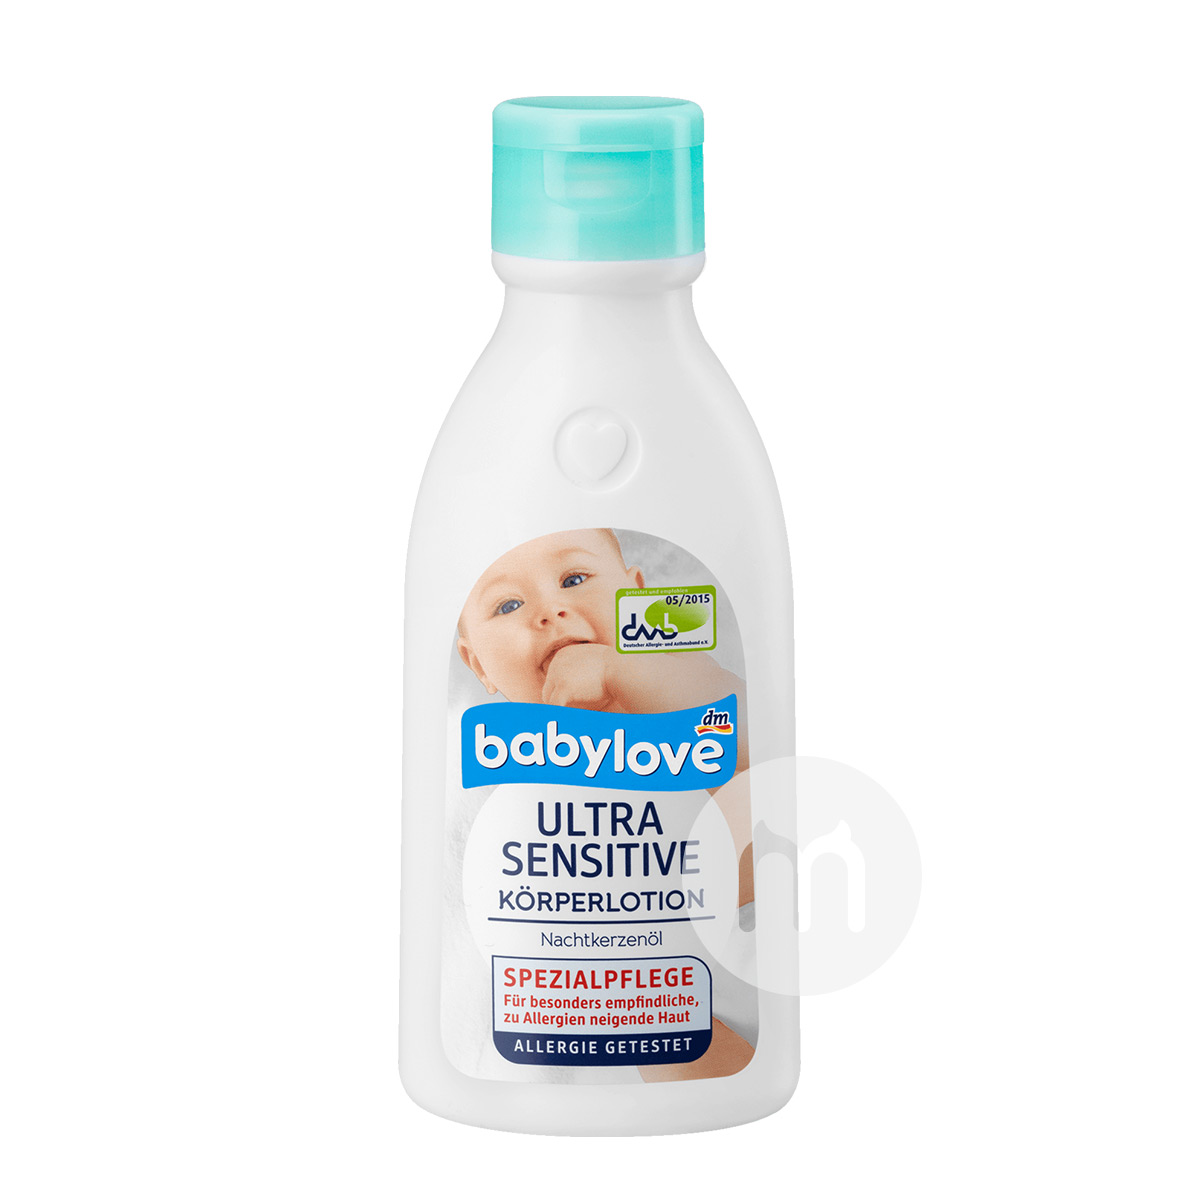 Babylove 德國寶貝愛嬰幼兒強效抗過敏身體潤膚乳 海外本土原版